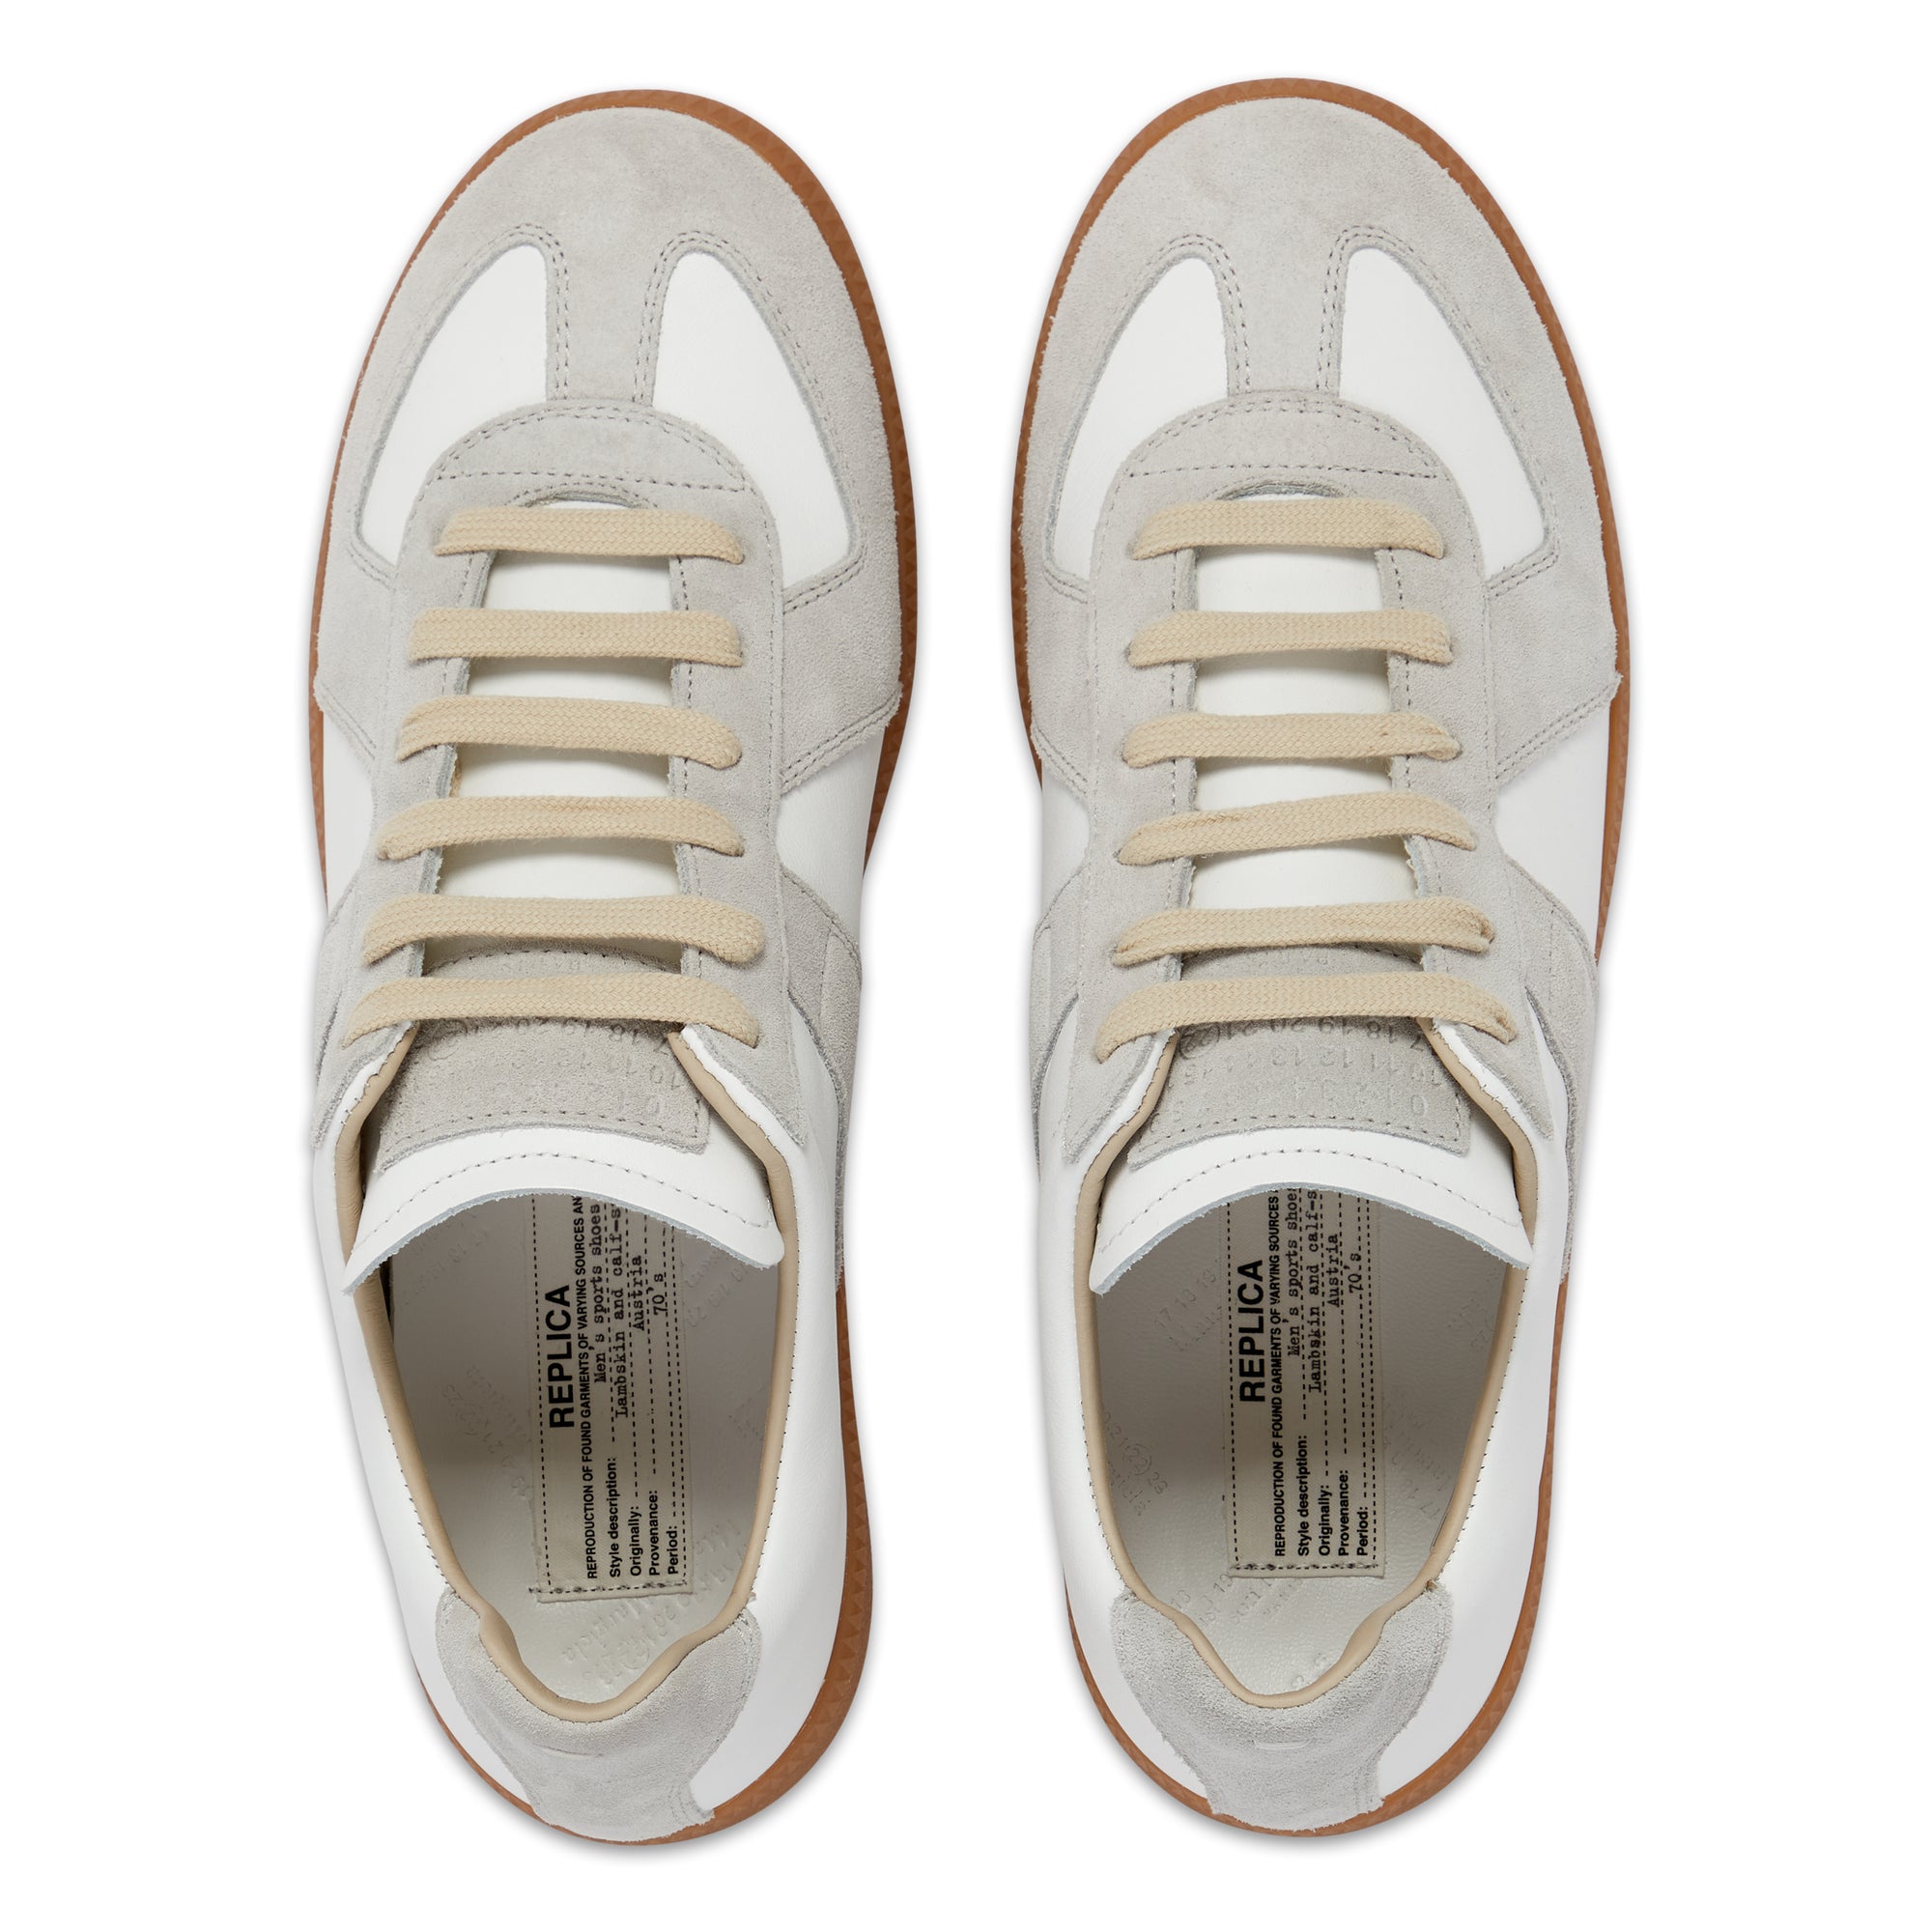 Maison Margiela - Men’s Replica Sneakers - (Off White) view 5